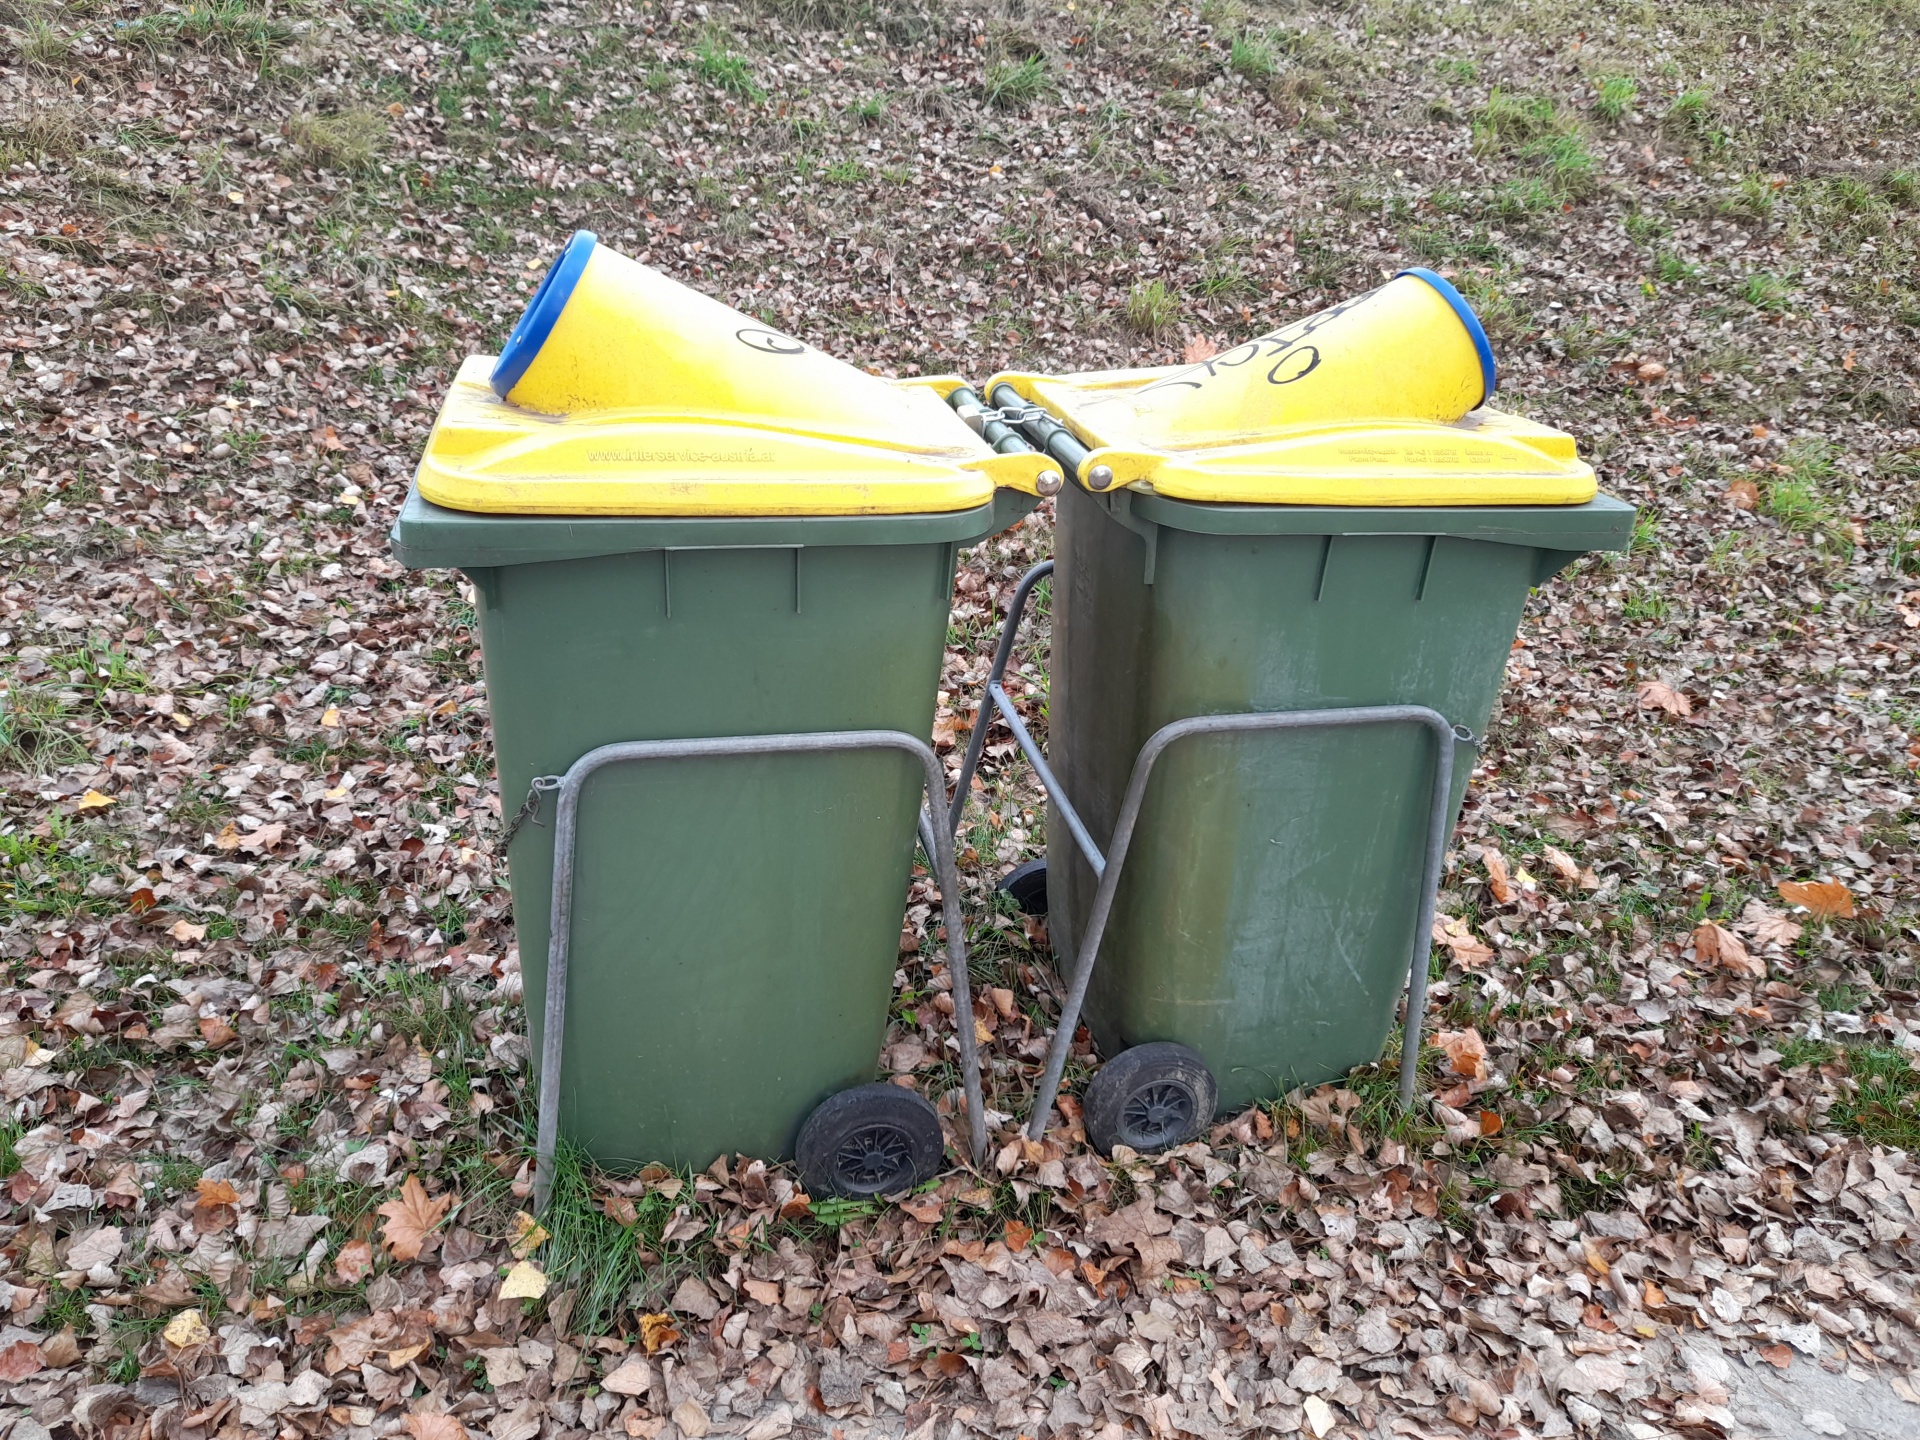 Wheelie bin compost bins